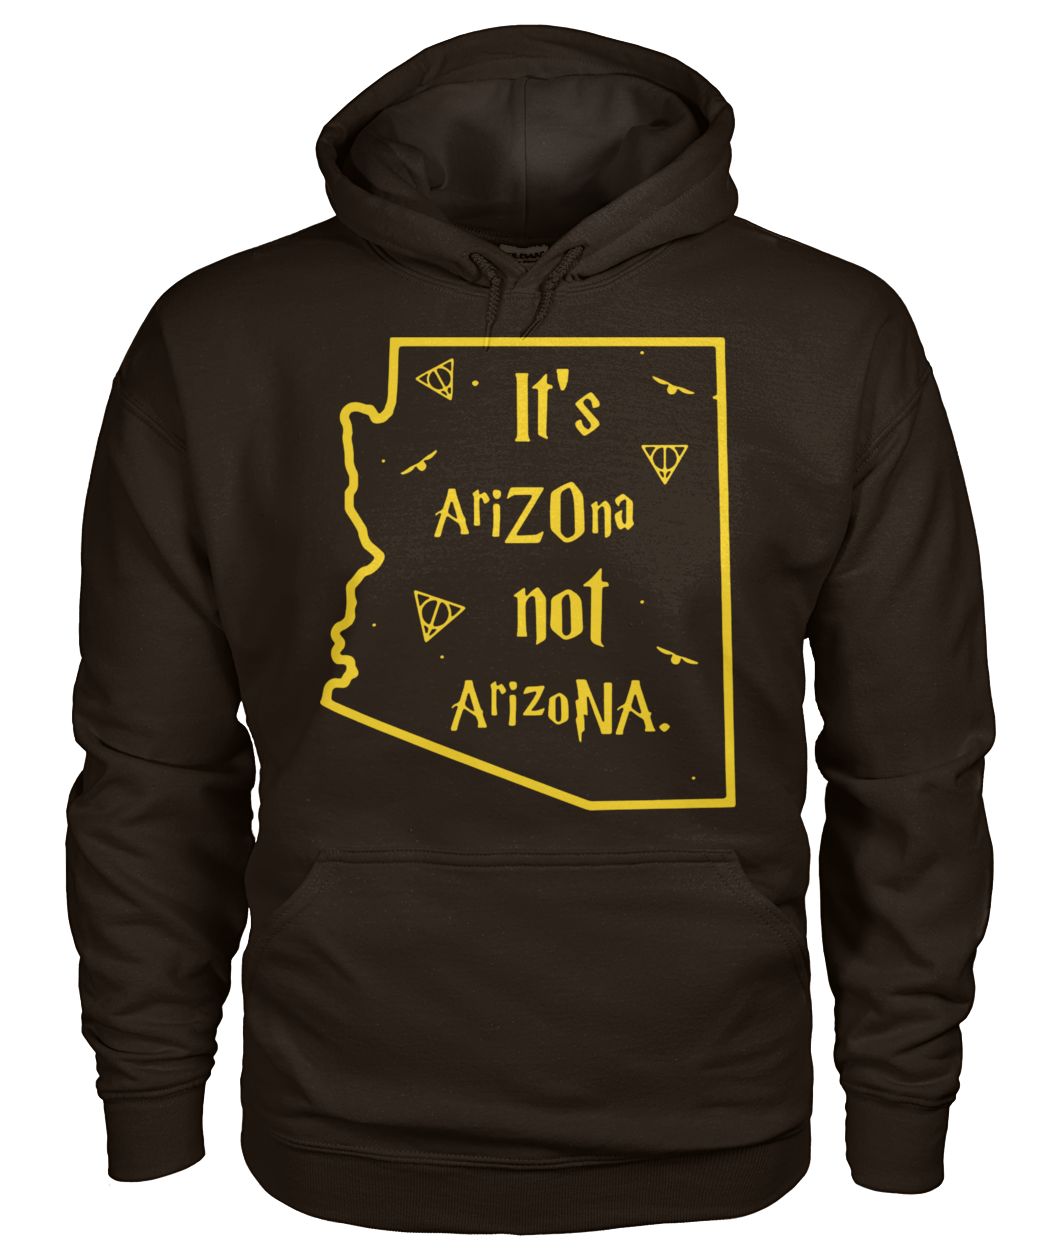 It's arizona not arizona gildan hoodie